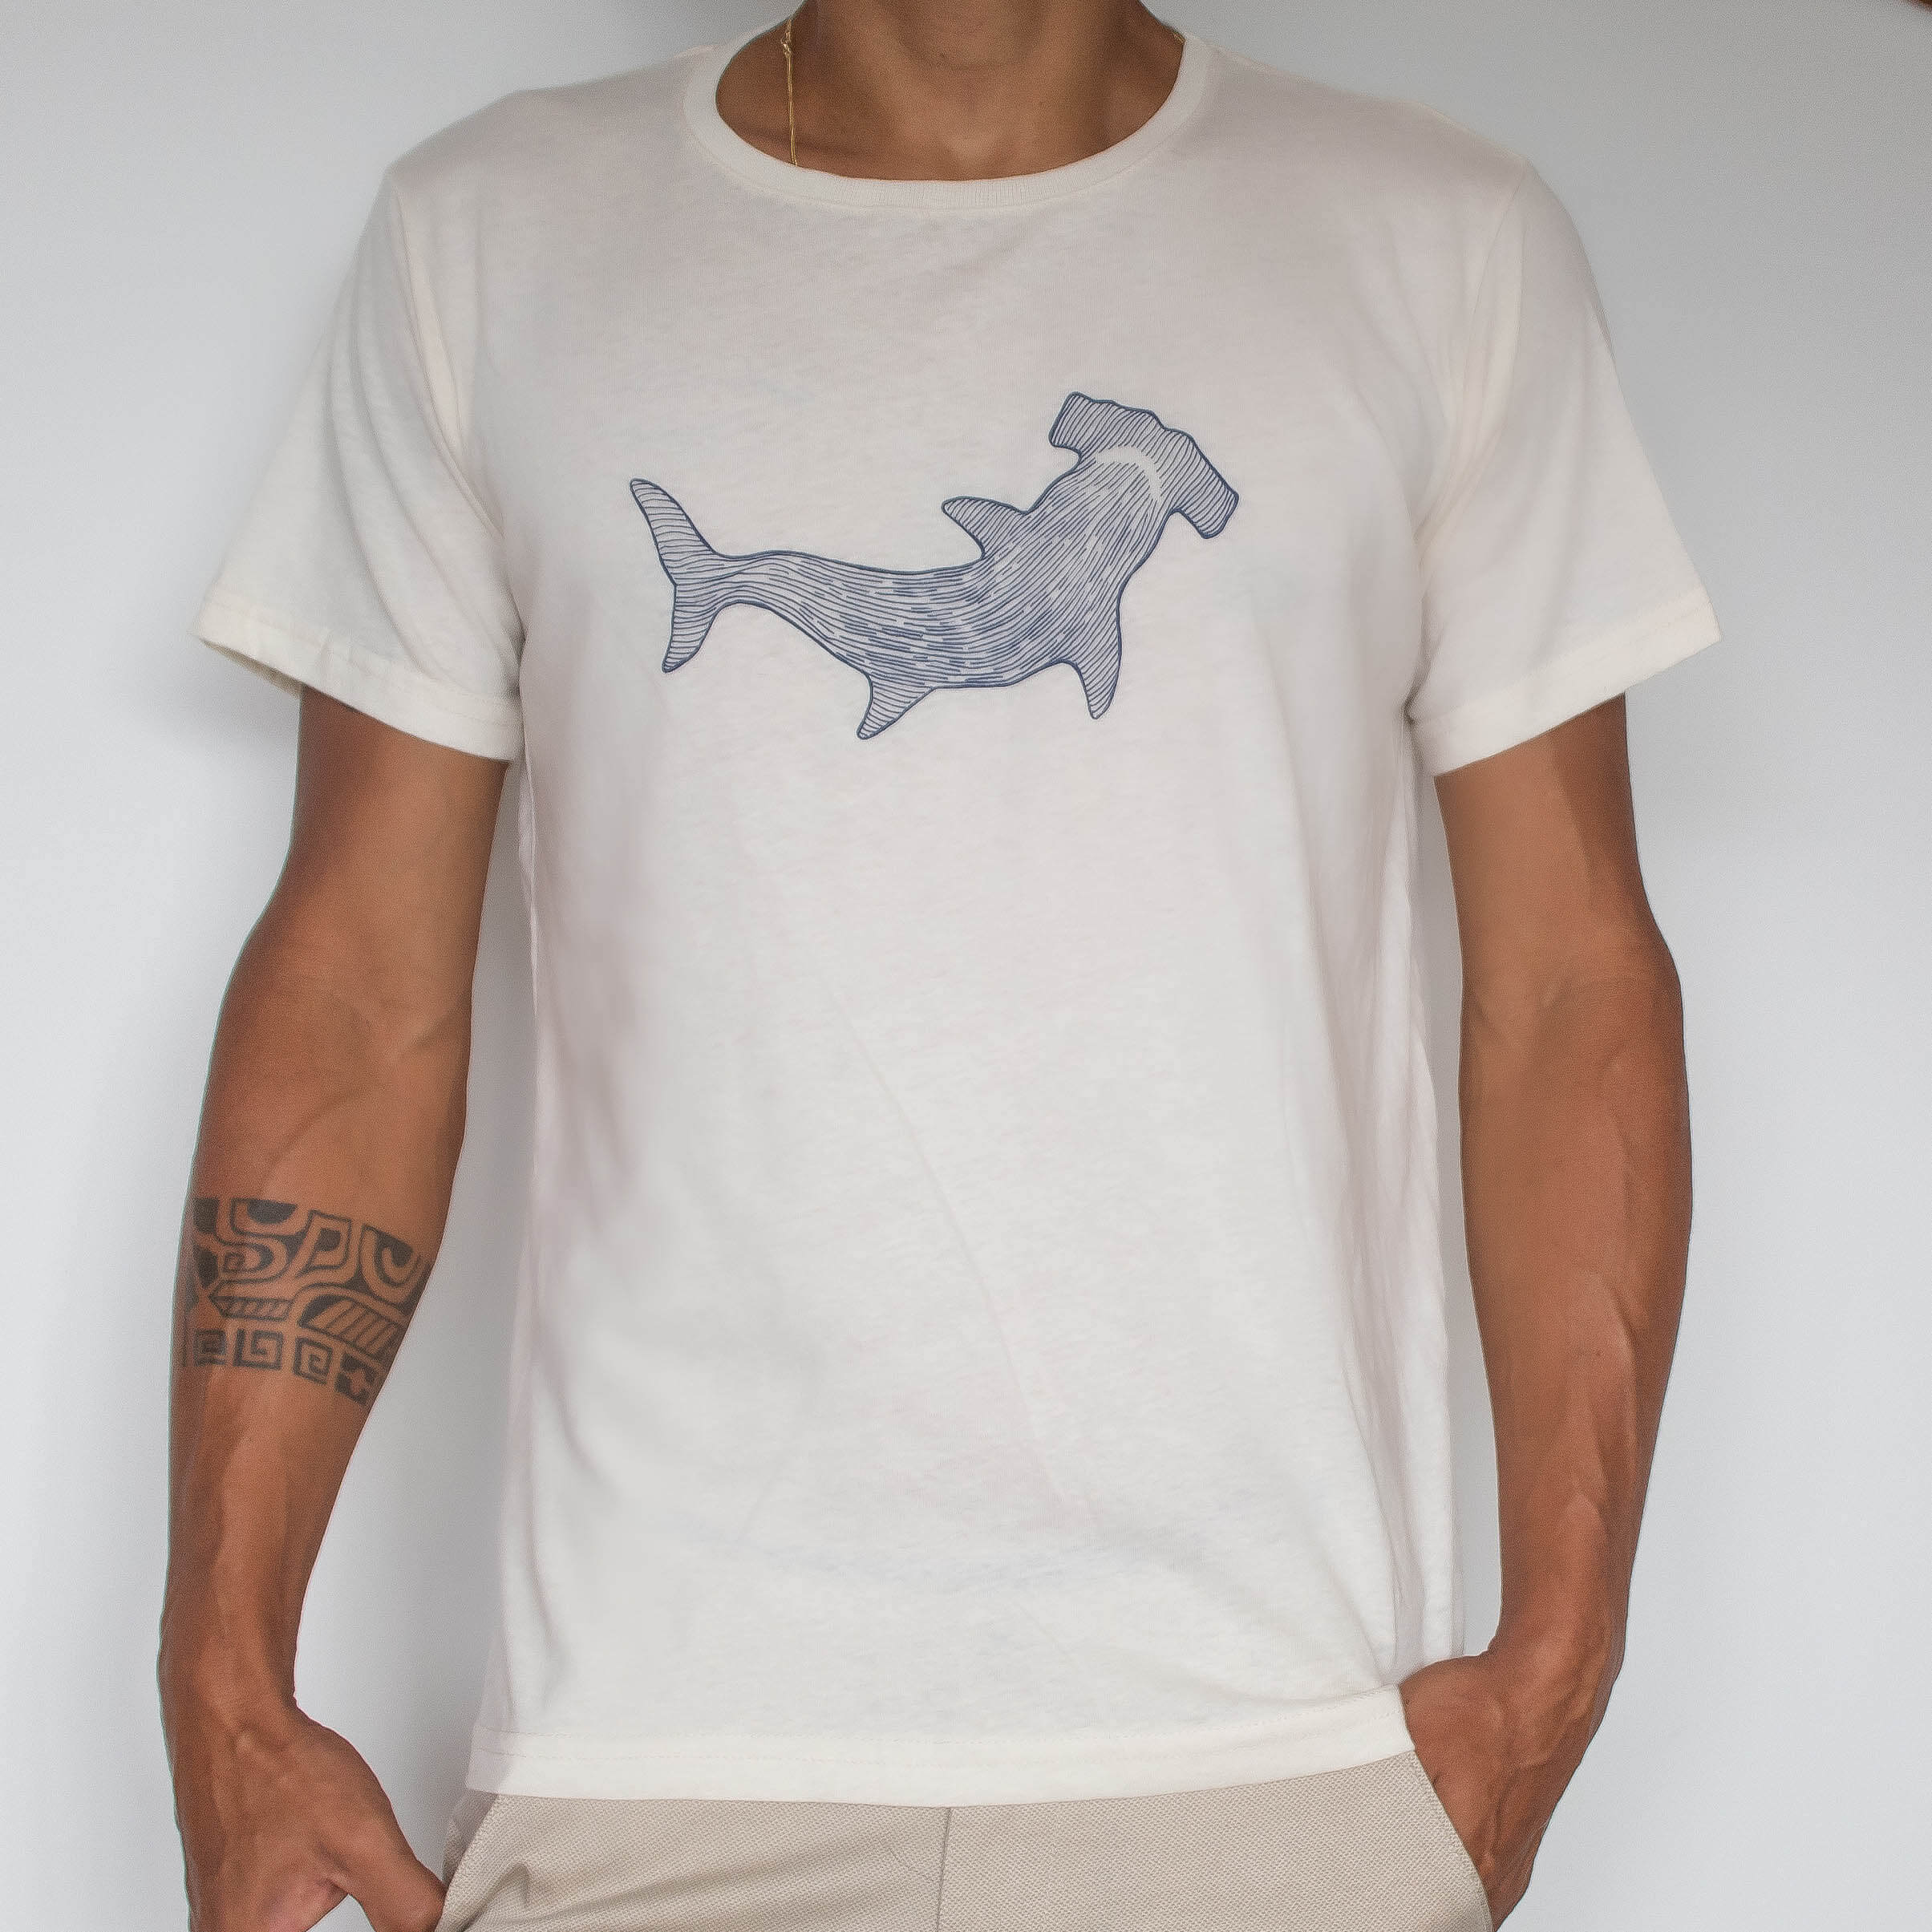 https://www.salinas-bay.com/wp-content/uploads/2020/12/men-hammerhead-shark-tshirt.jpg